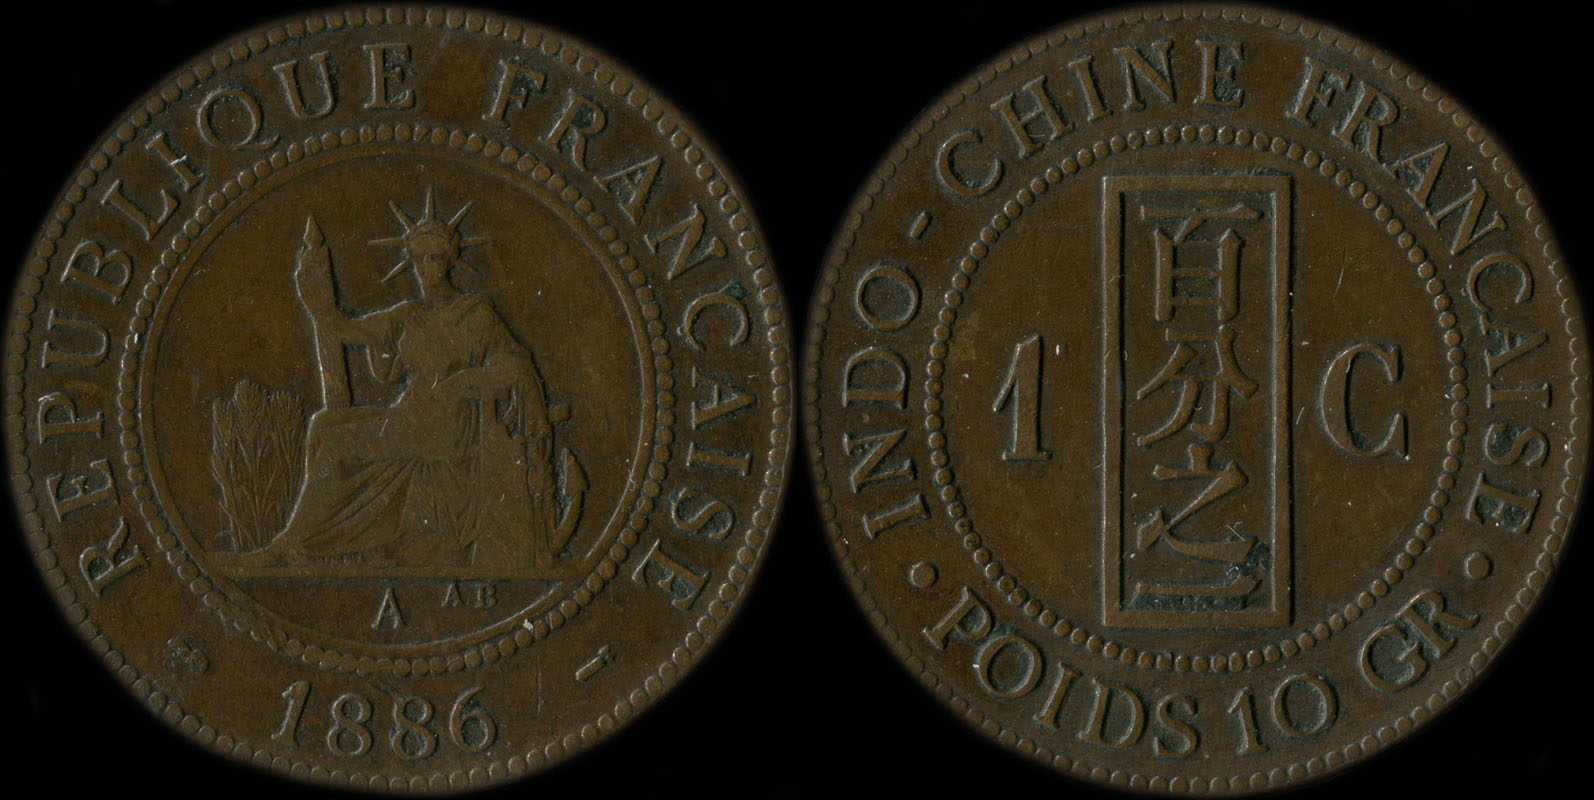 Pice de 1 centime Indochine 1886